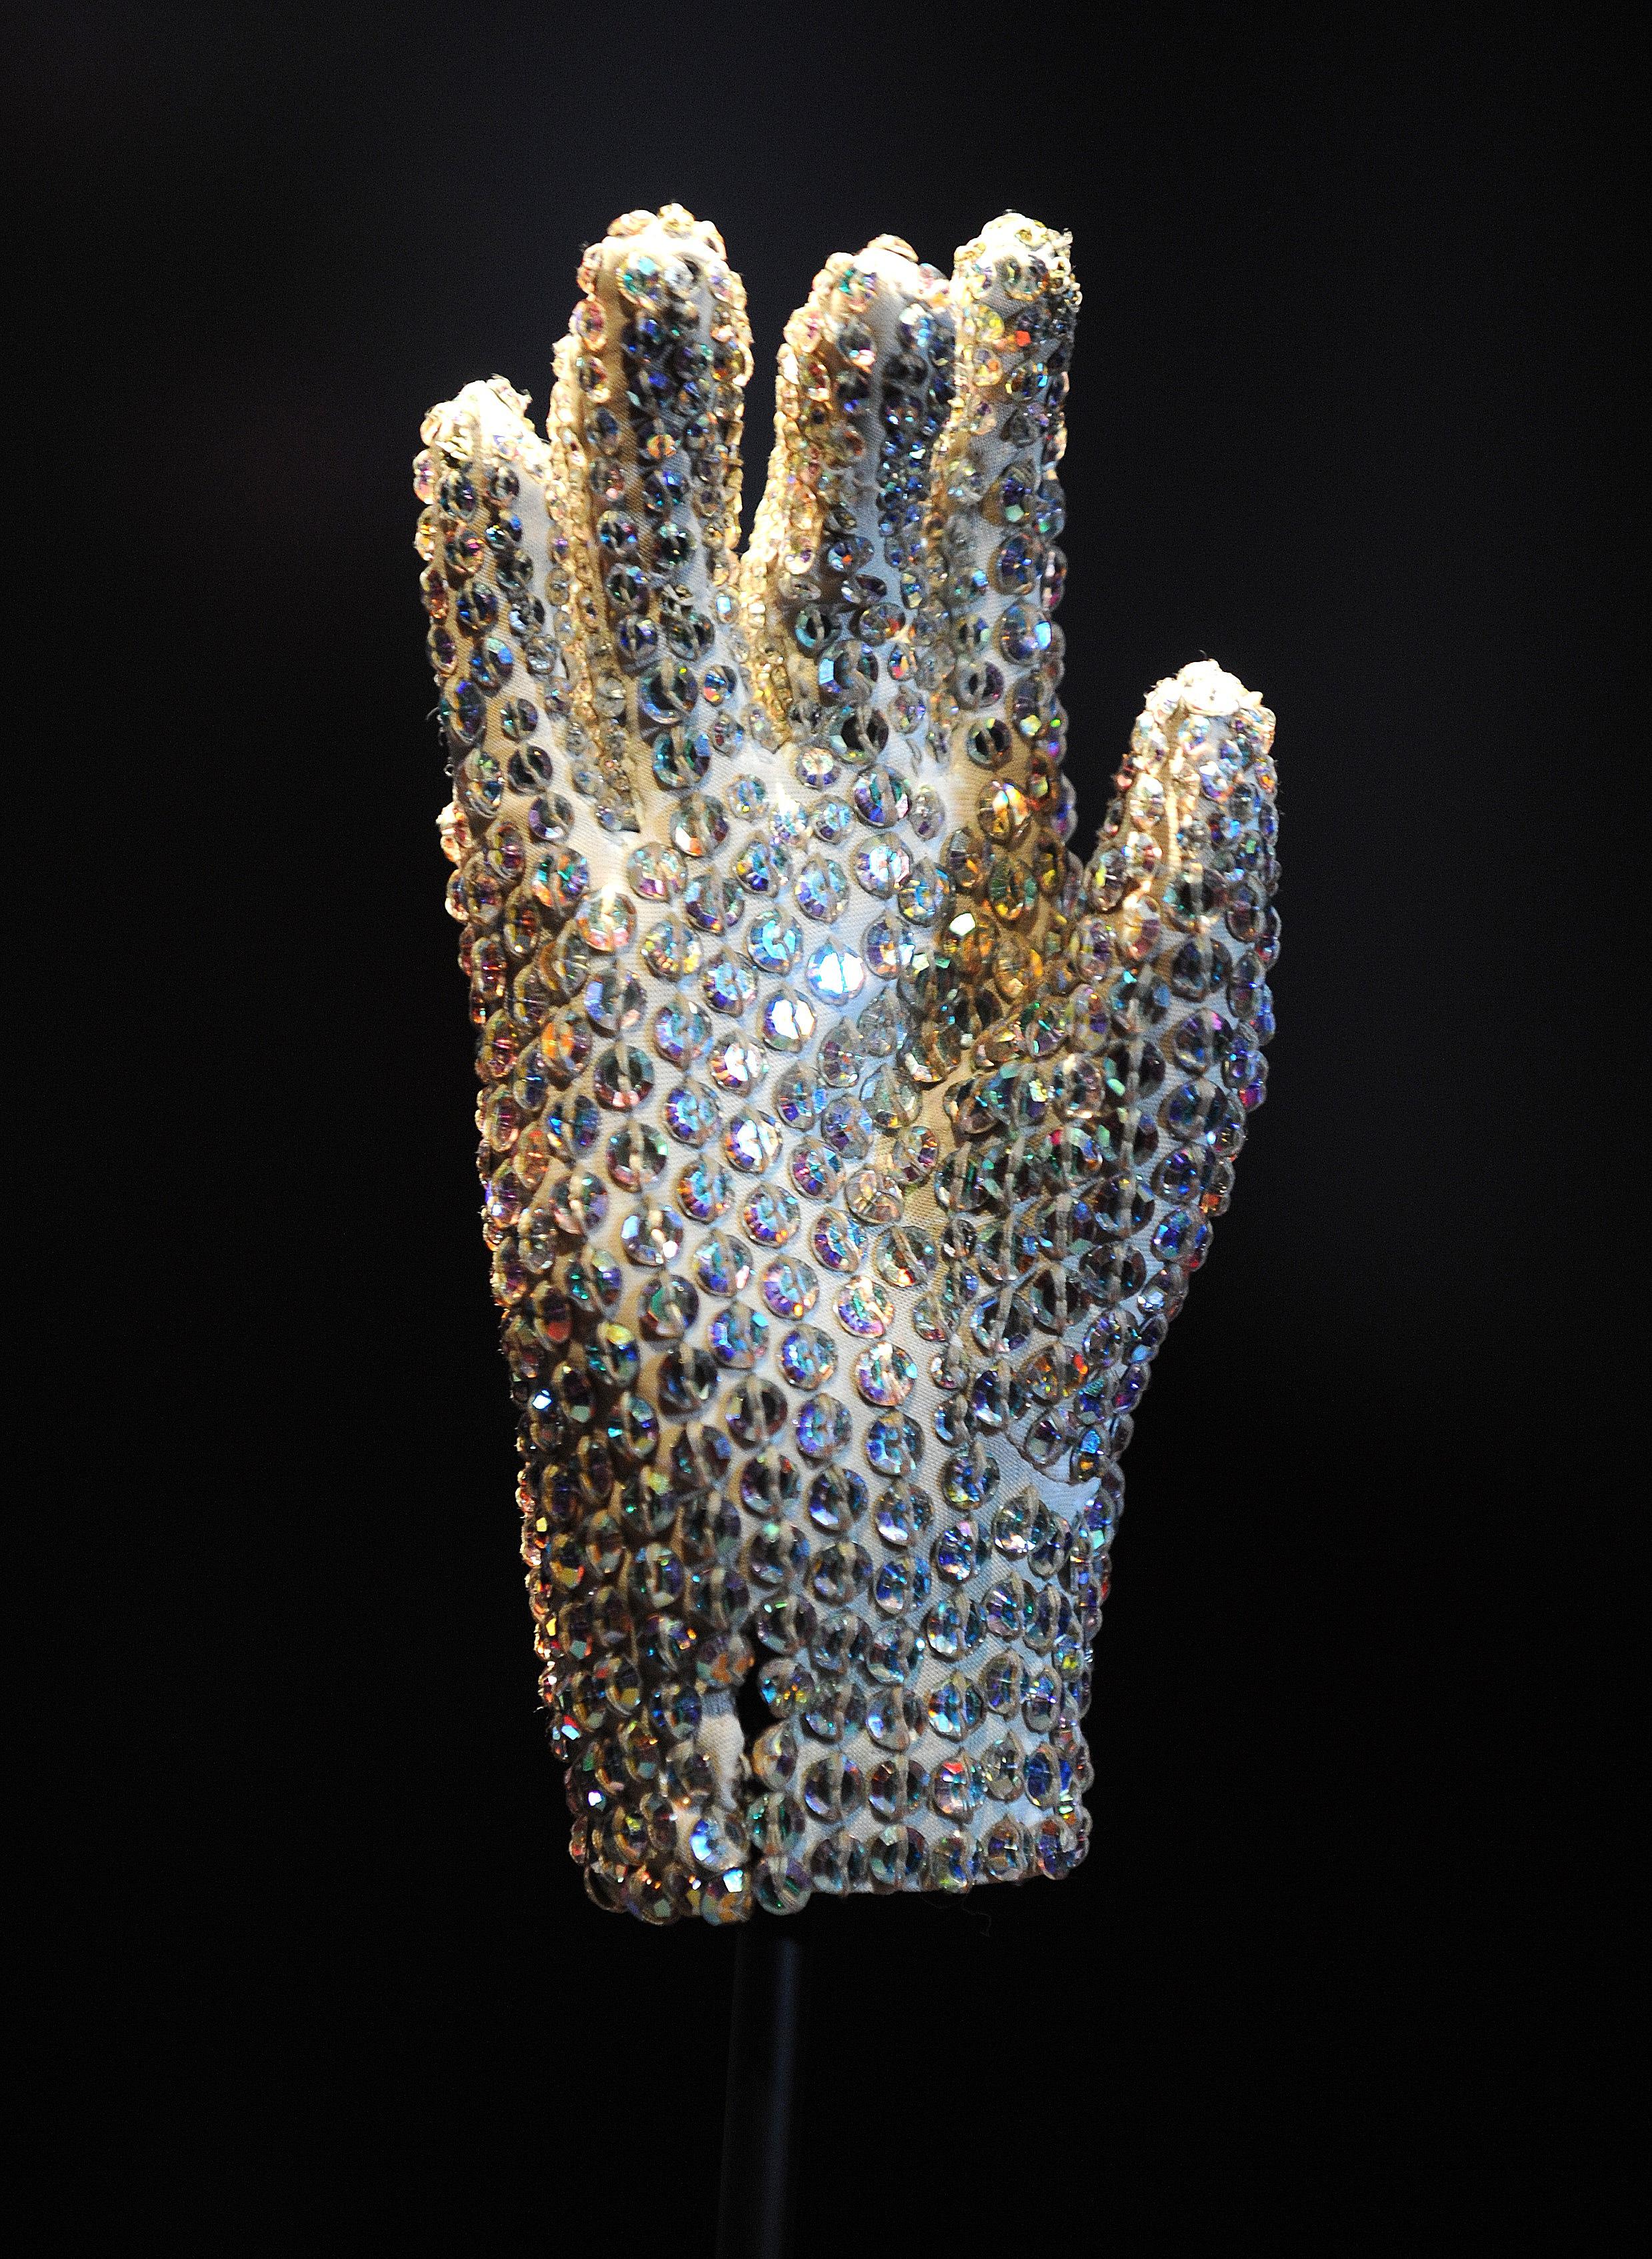 Beat it! Michael Jackson's iconic white glove fetches 85,000